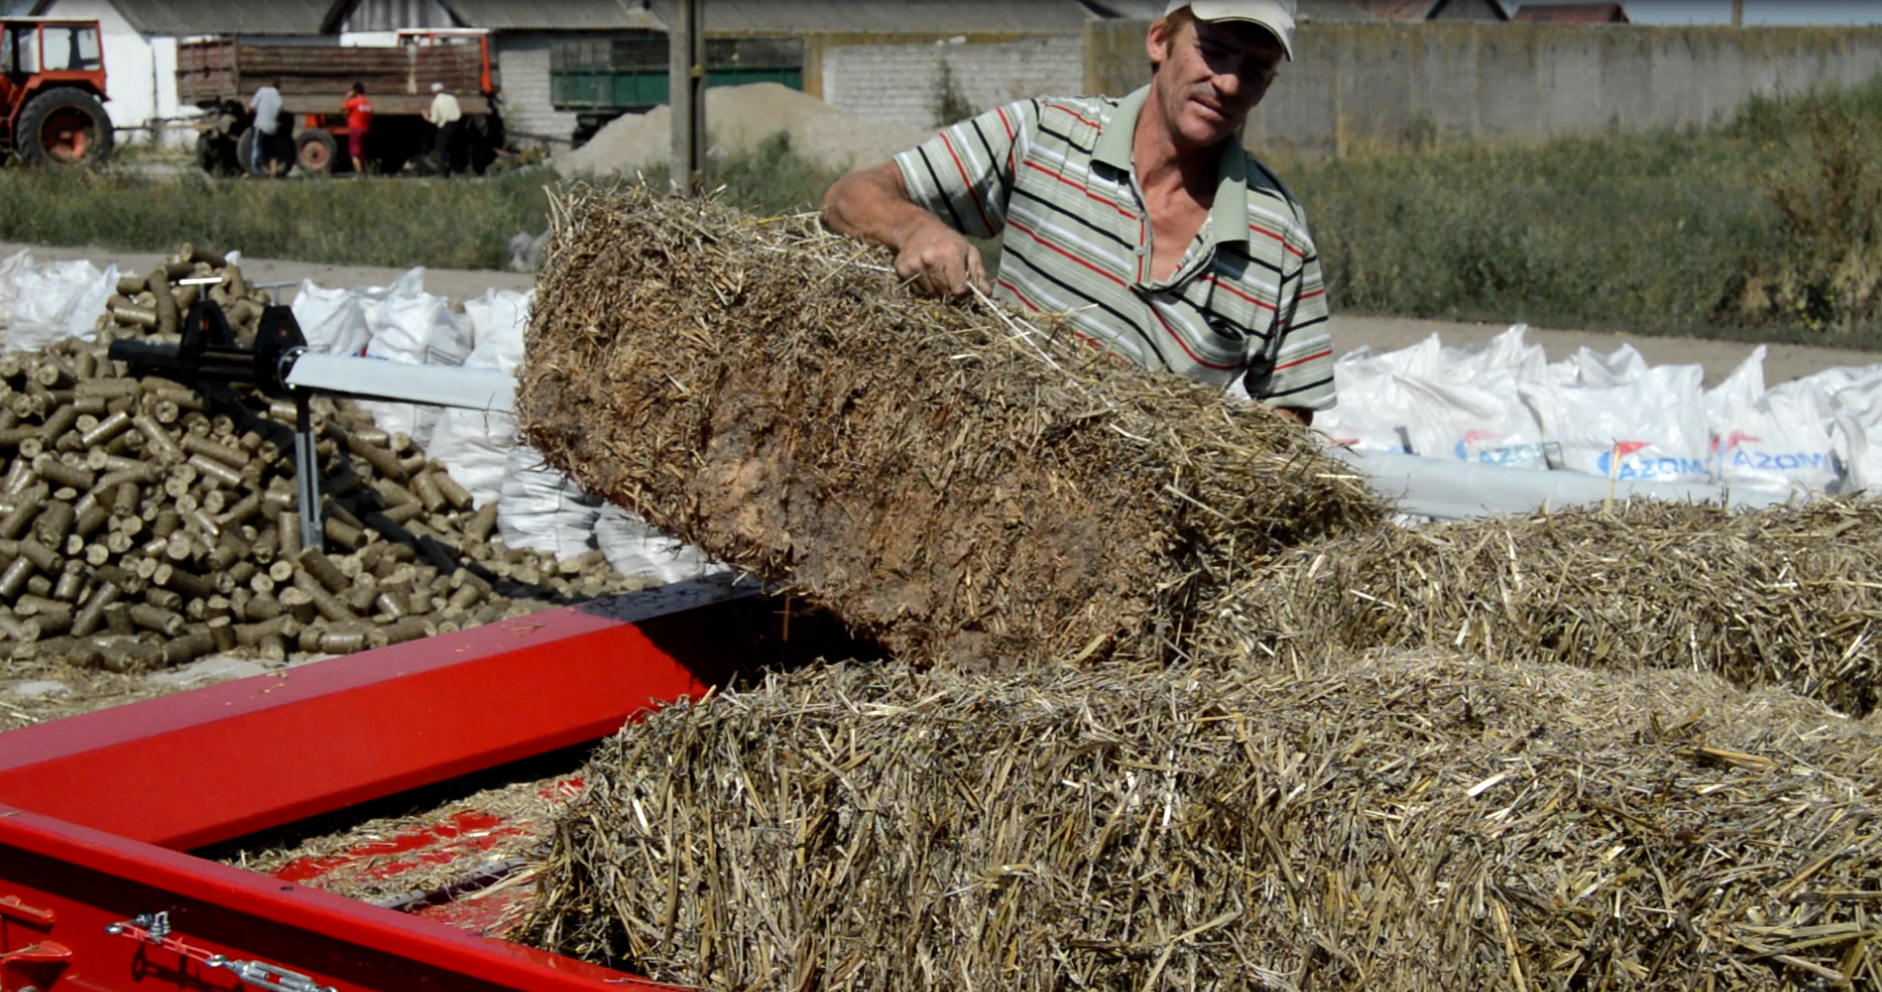 Feeding of bales of wheat straw into the shredder